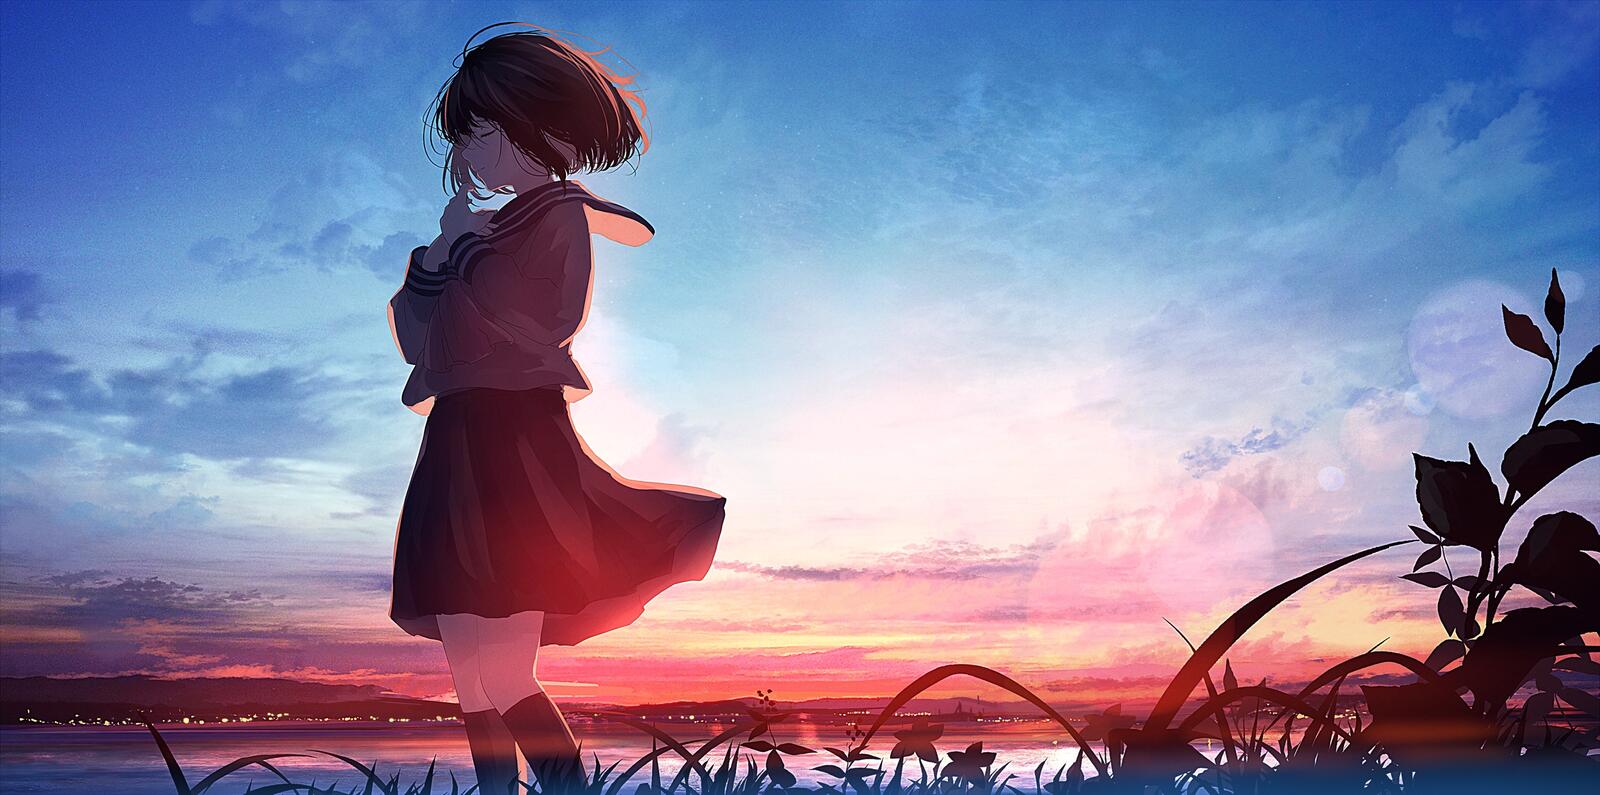 Wallpapers wallpaper anime school girl sunset picturesque on the desktop